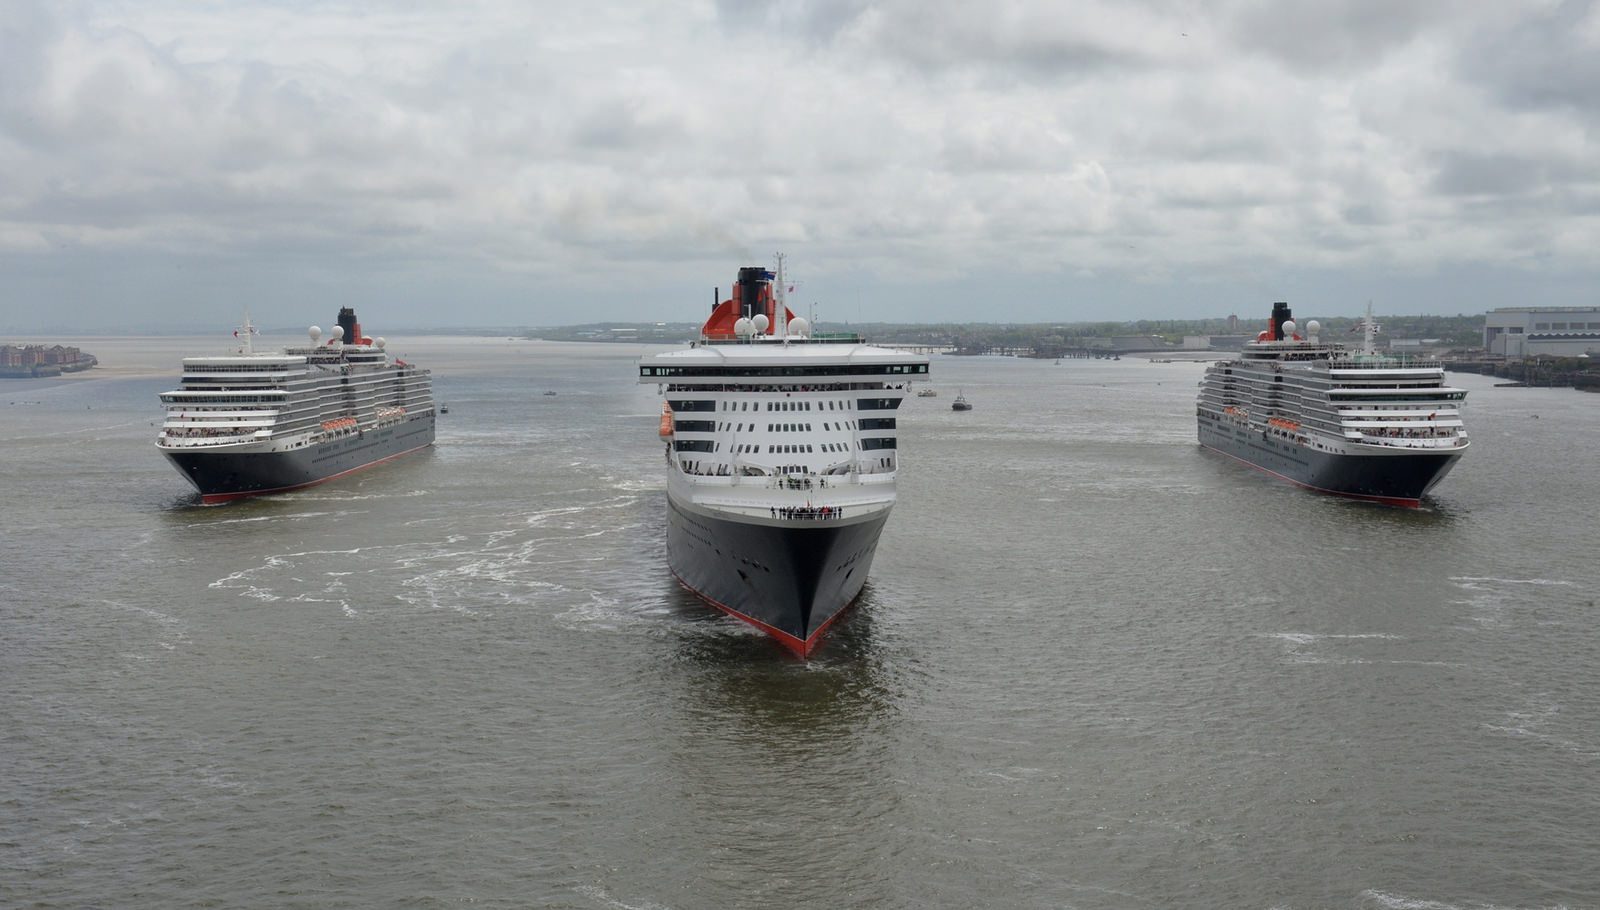 Cunard cruise ships meet